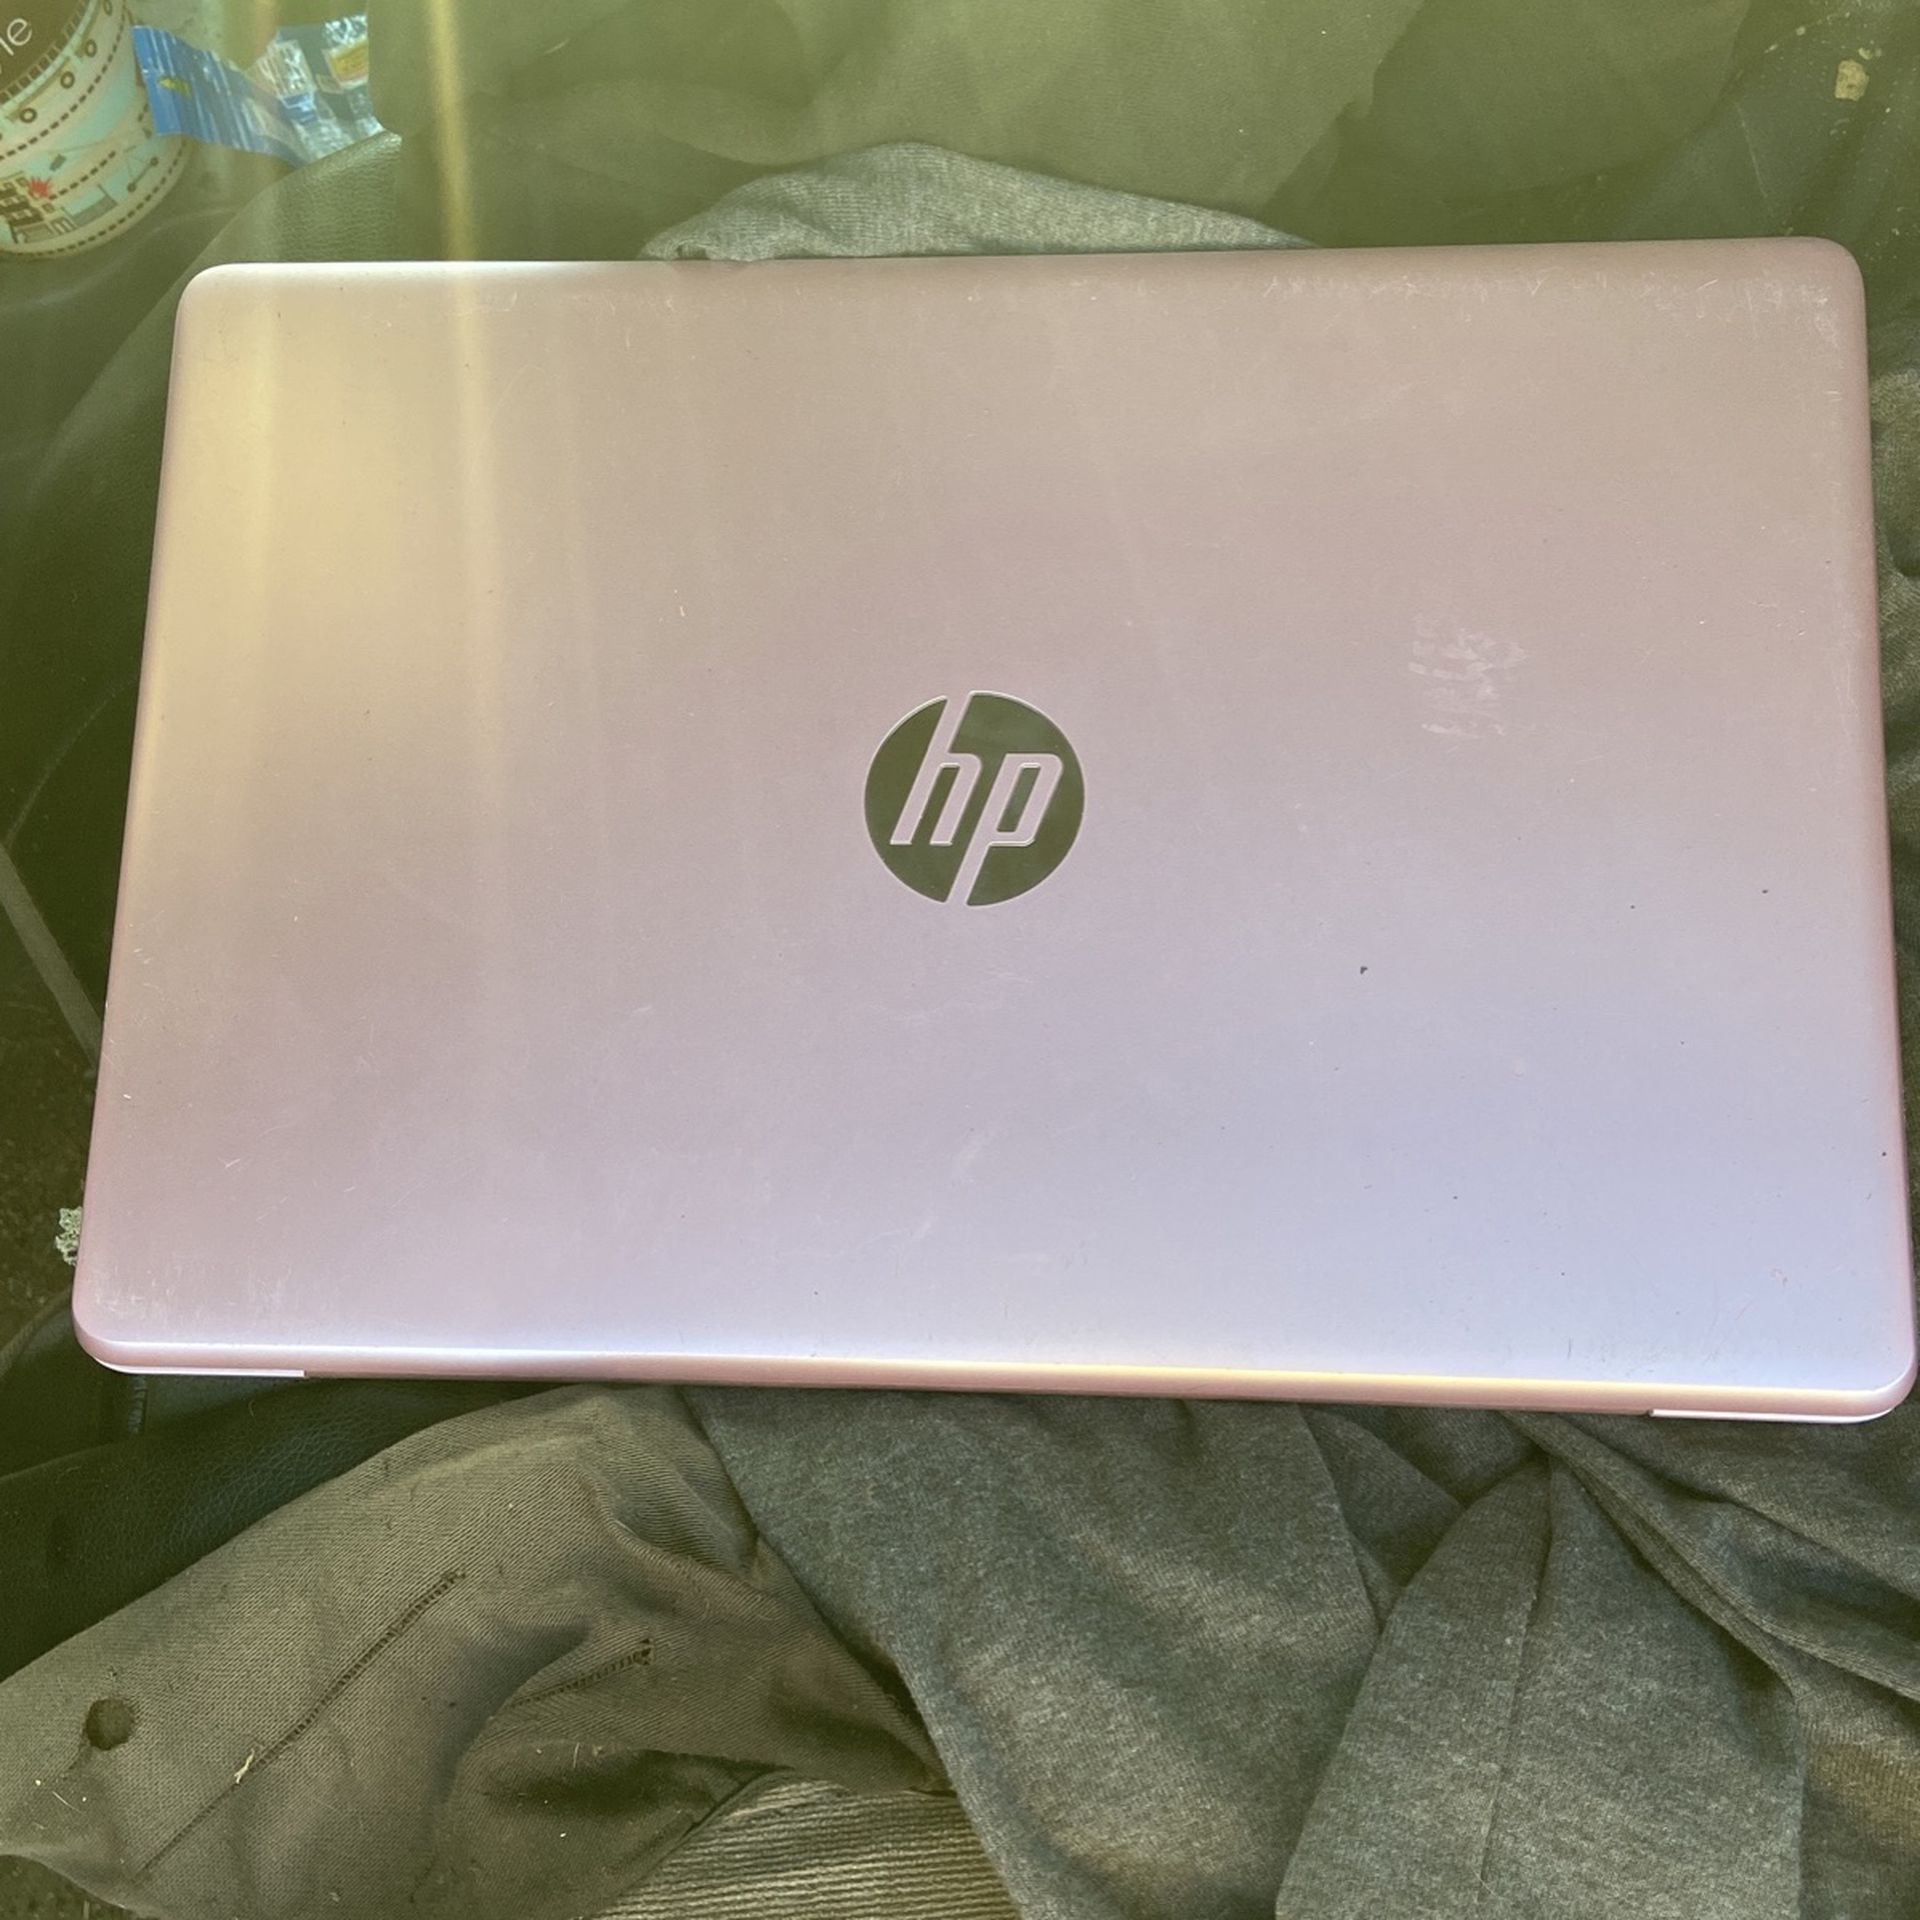 HP Laptop $140